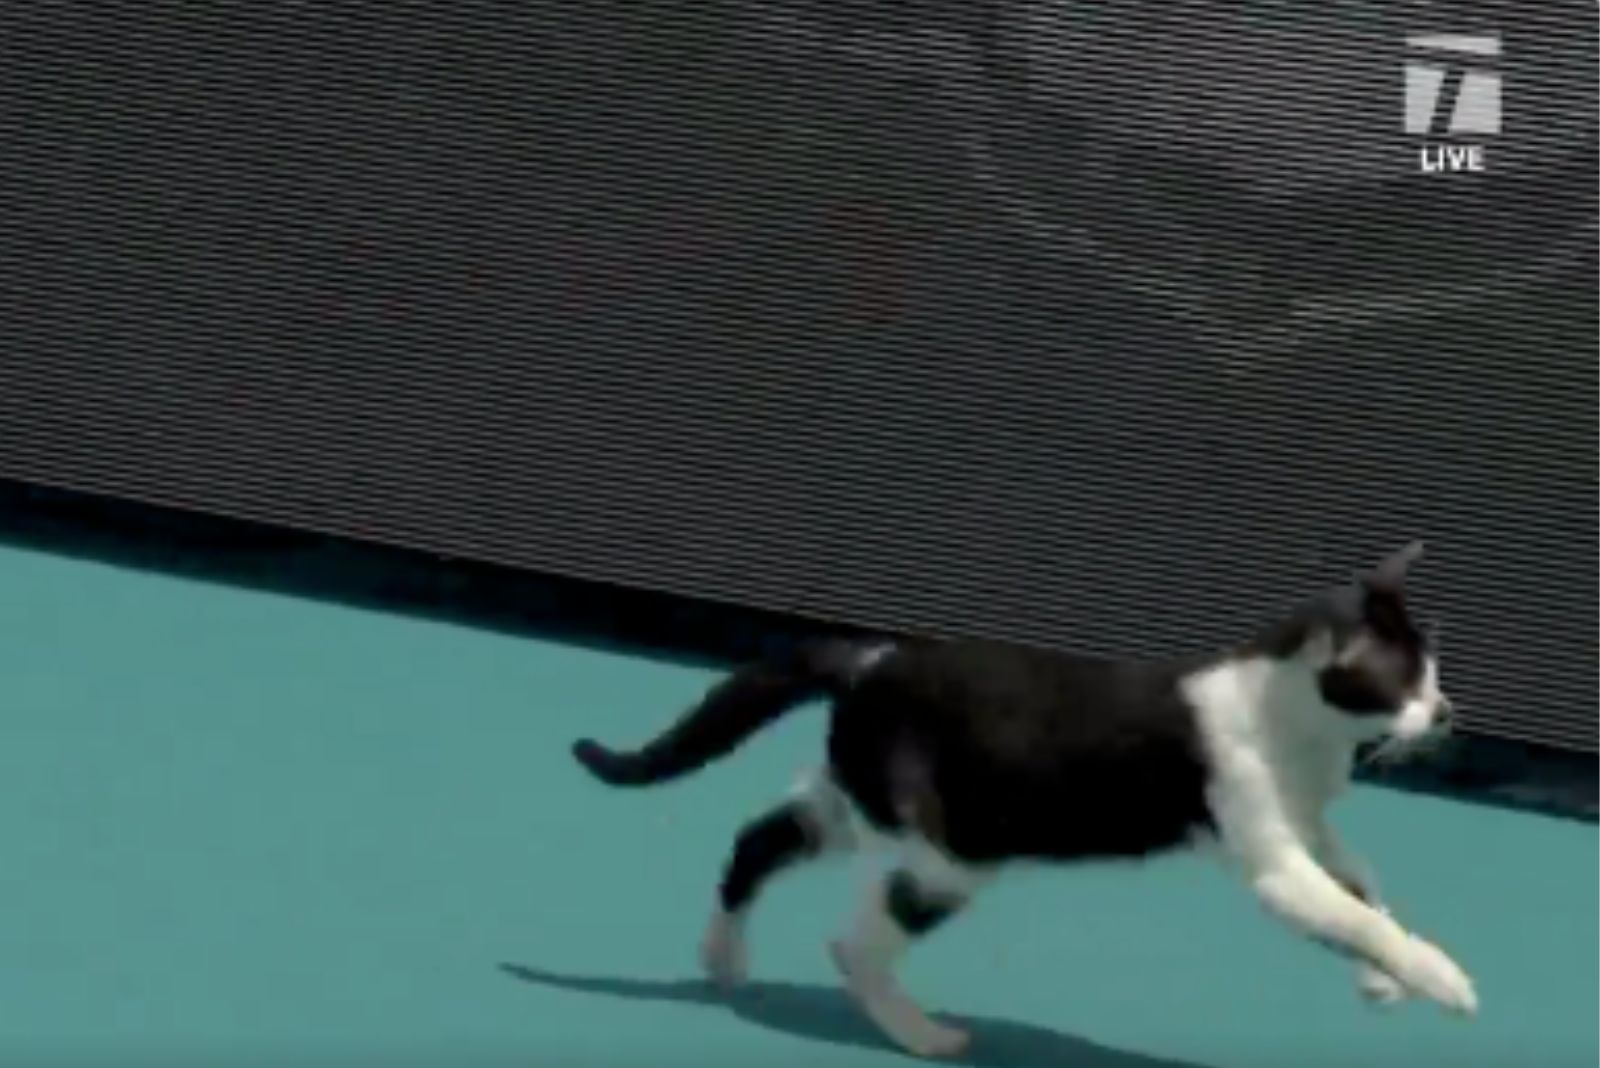 cat running on a tennis ground